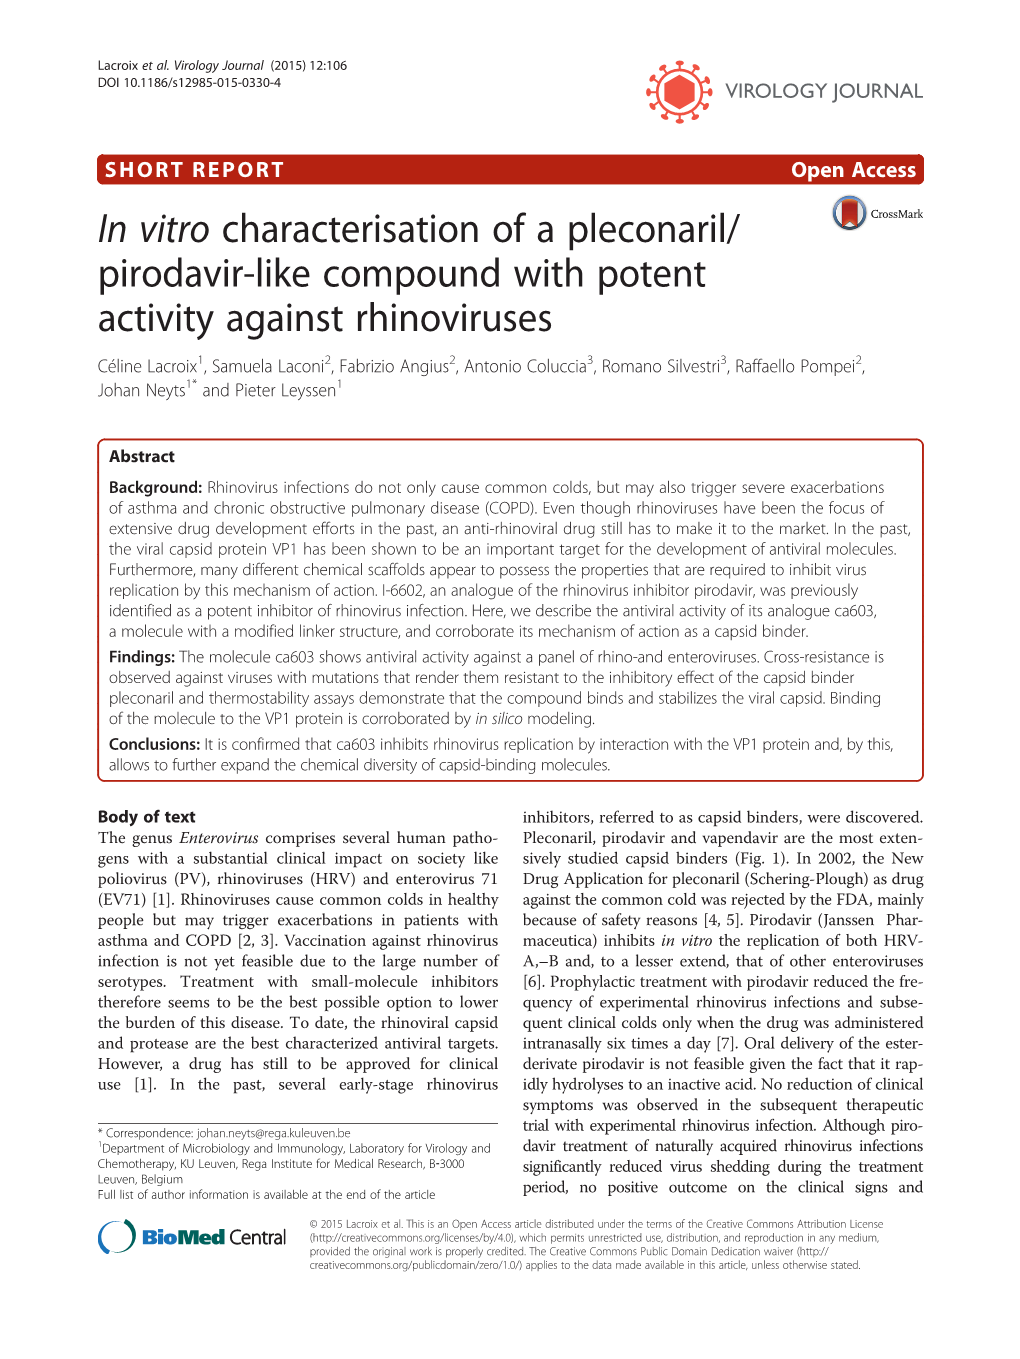 In Vitro Characterisation of a Pleconaril/Pirodavir-Like Compound with Potent Activity Against Rhinoviruses